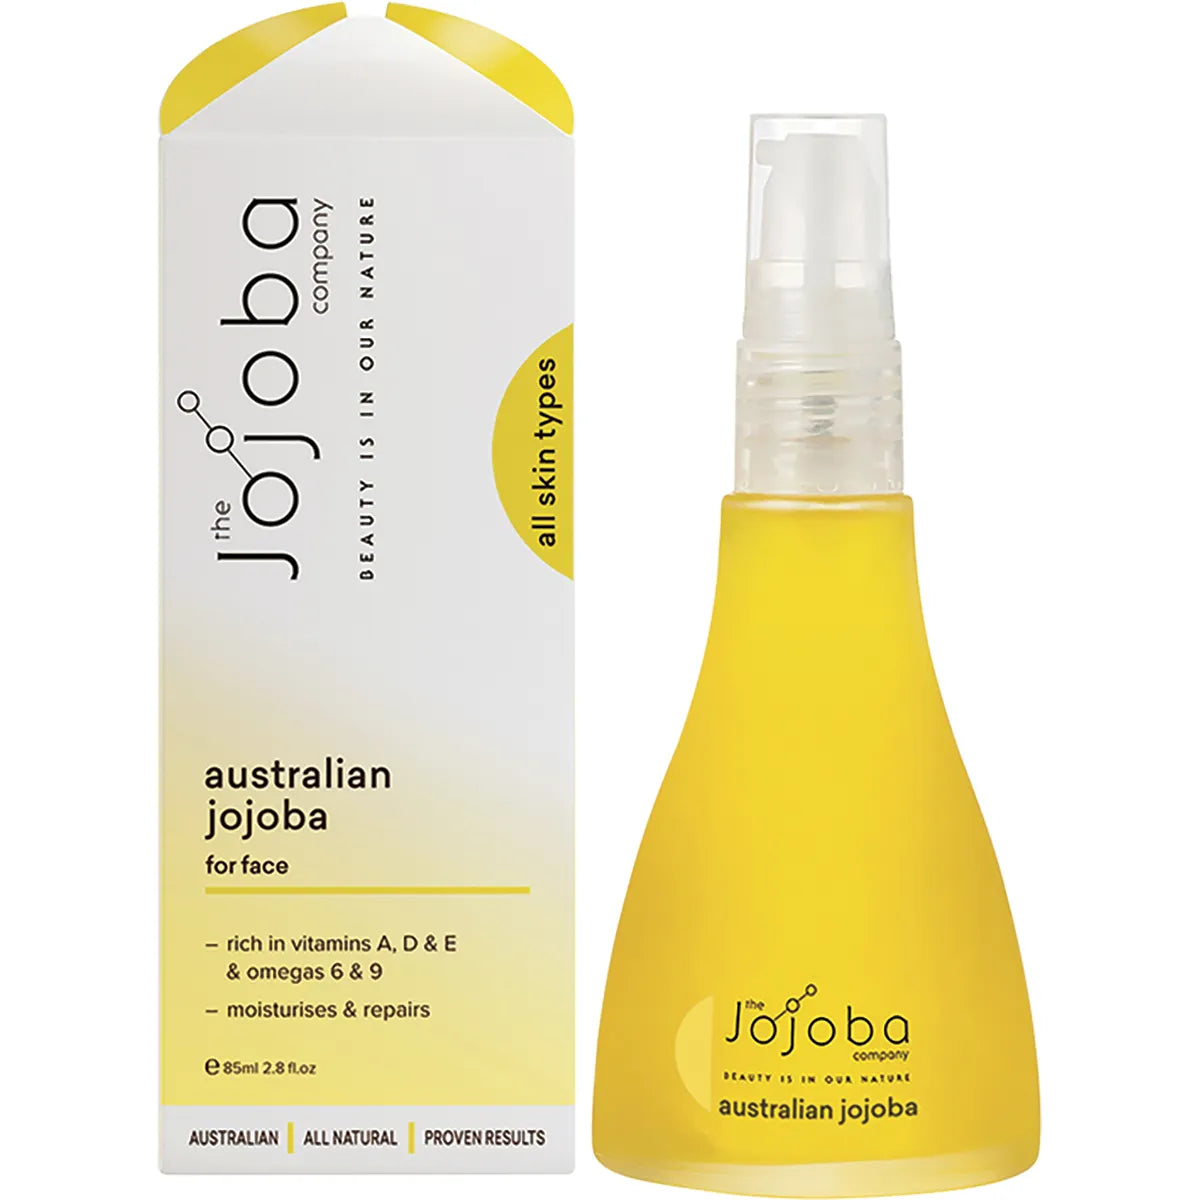 The Jojoba Company Australian Jojoba Oil 30ml, 85ml Or 200ml Rich In Vitamins A,D,E & Omega 6 & 9